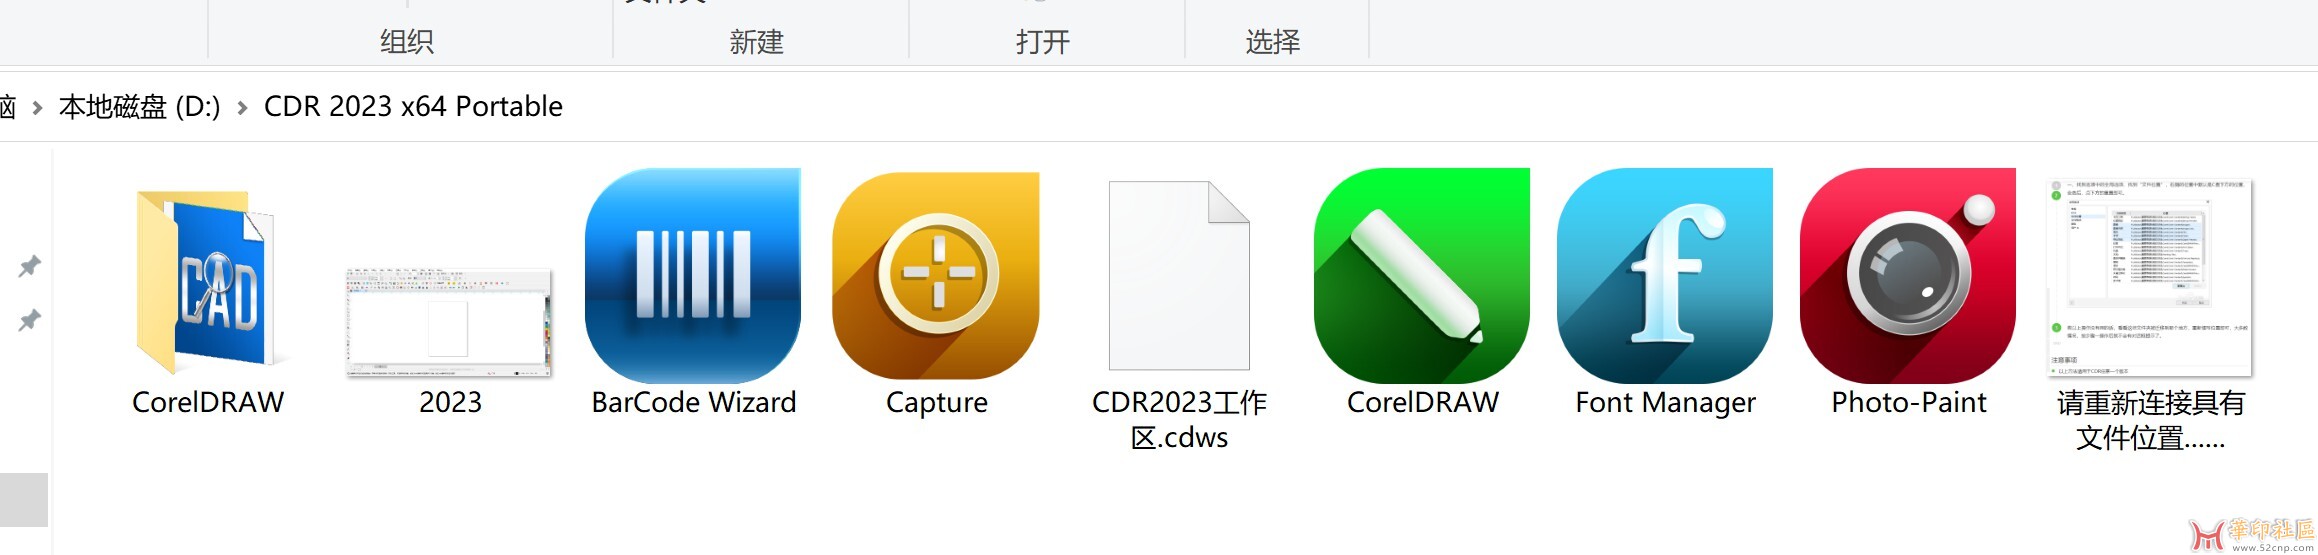 CorelDRAW 2023纯绿色插件版 解压后直接运行,无需安装!!!{tag}(1)